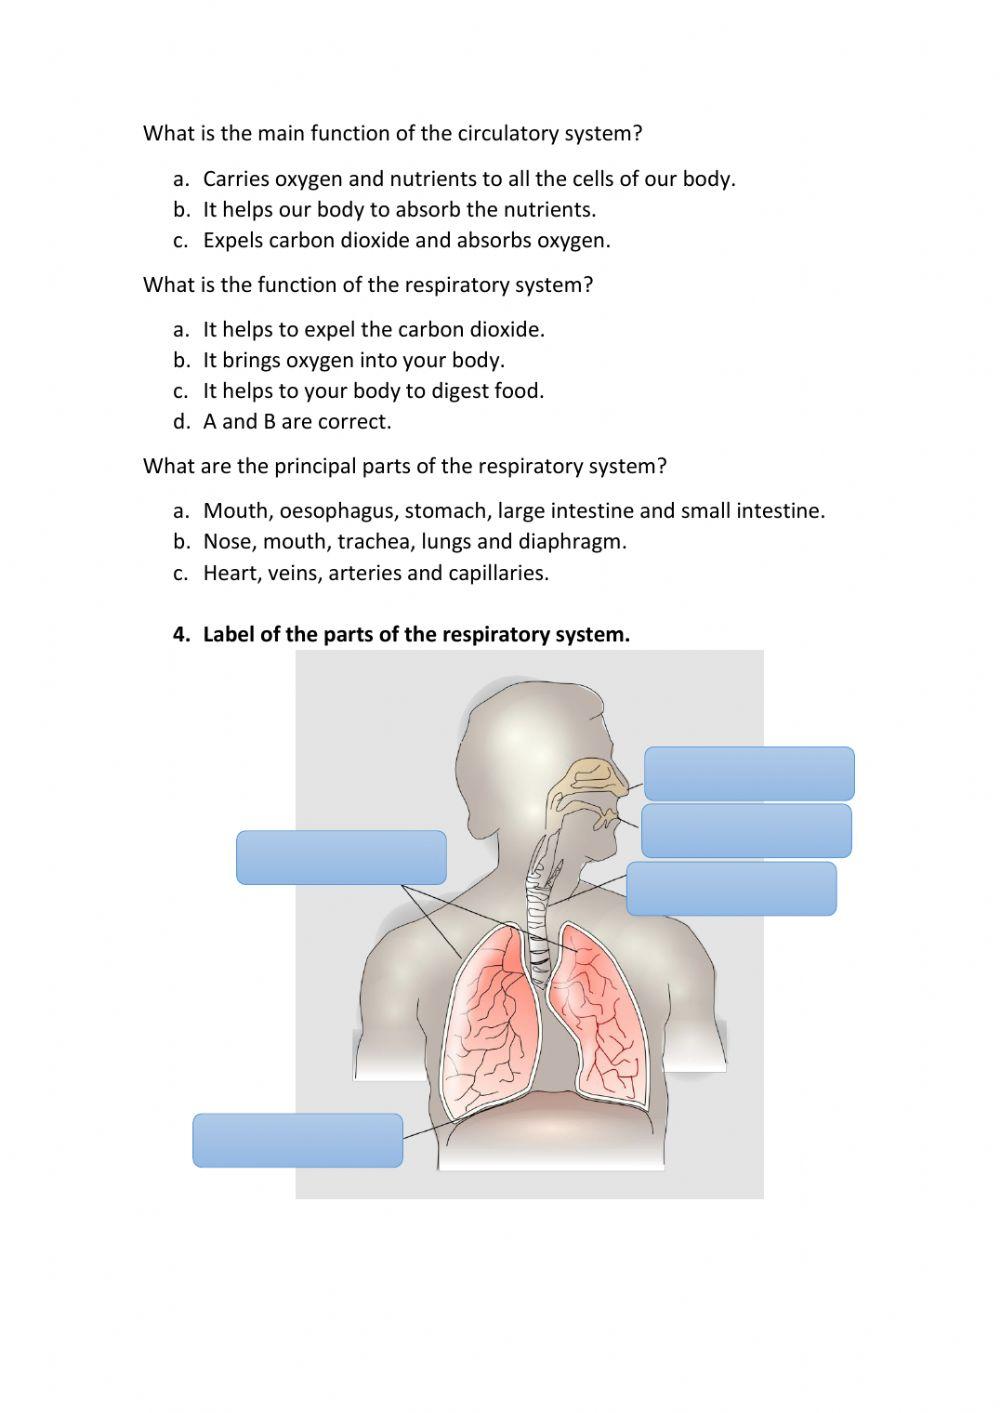 Circulatory and respiratory system